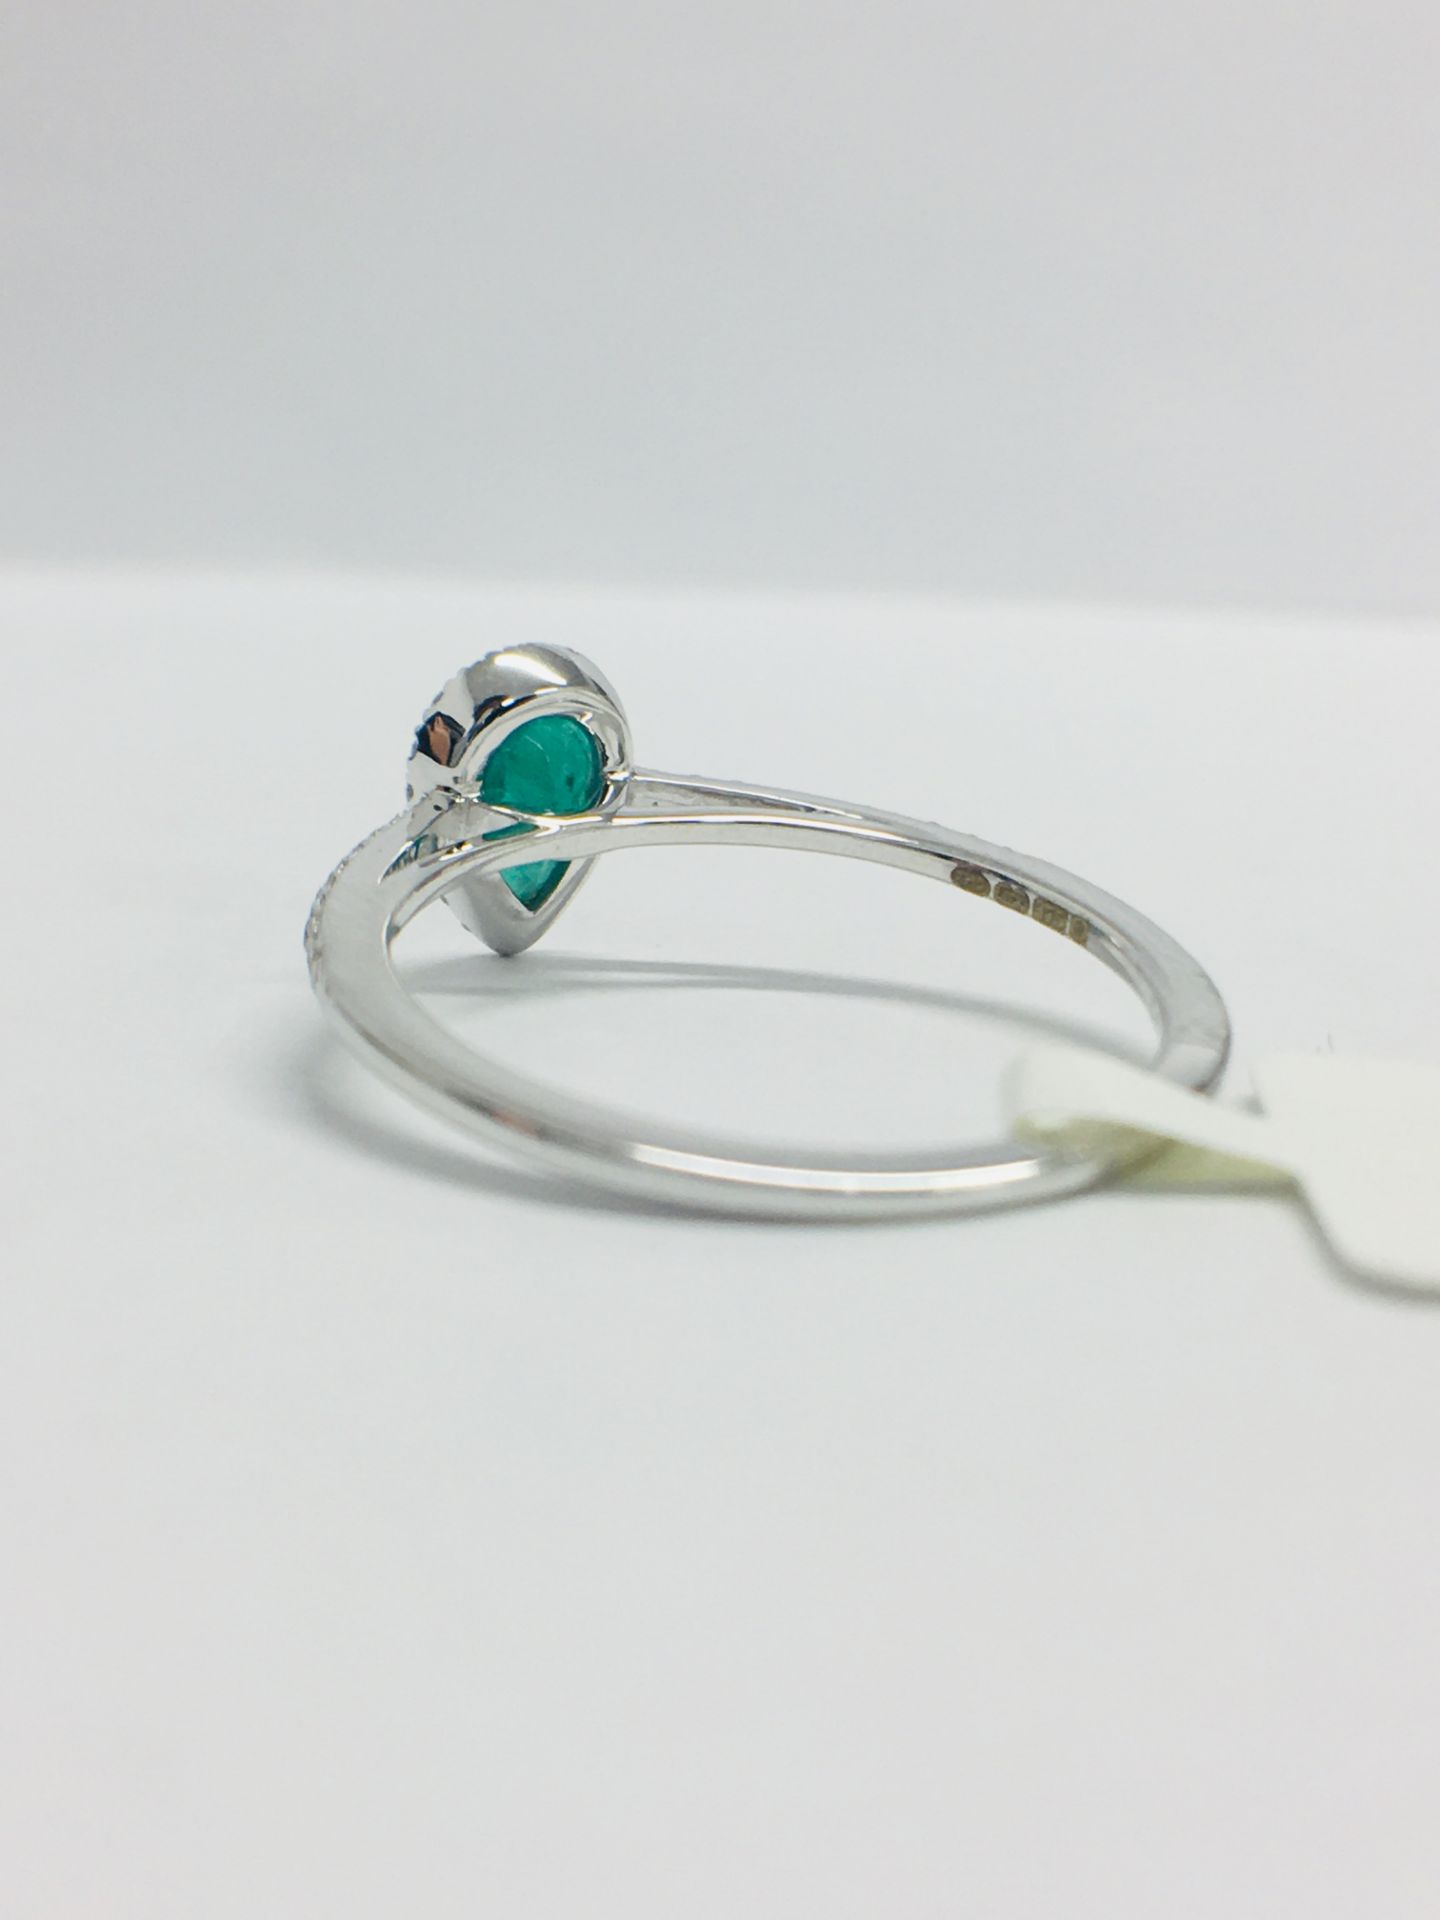 9ct White Pearshape Emerald Diamond Ring - Image 5 of 11